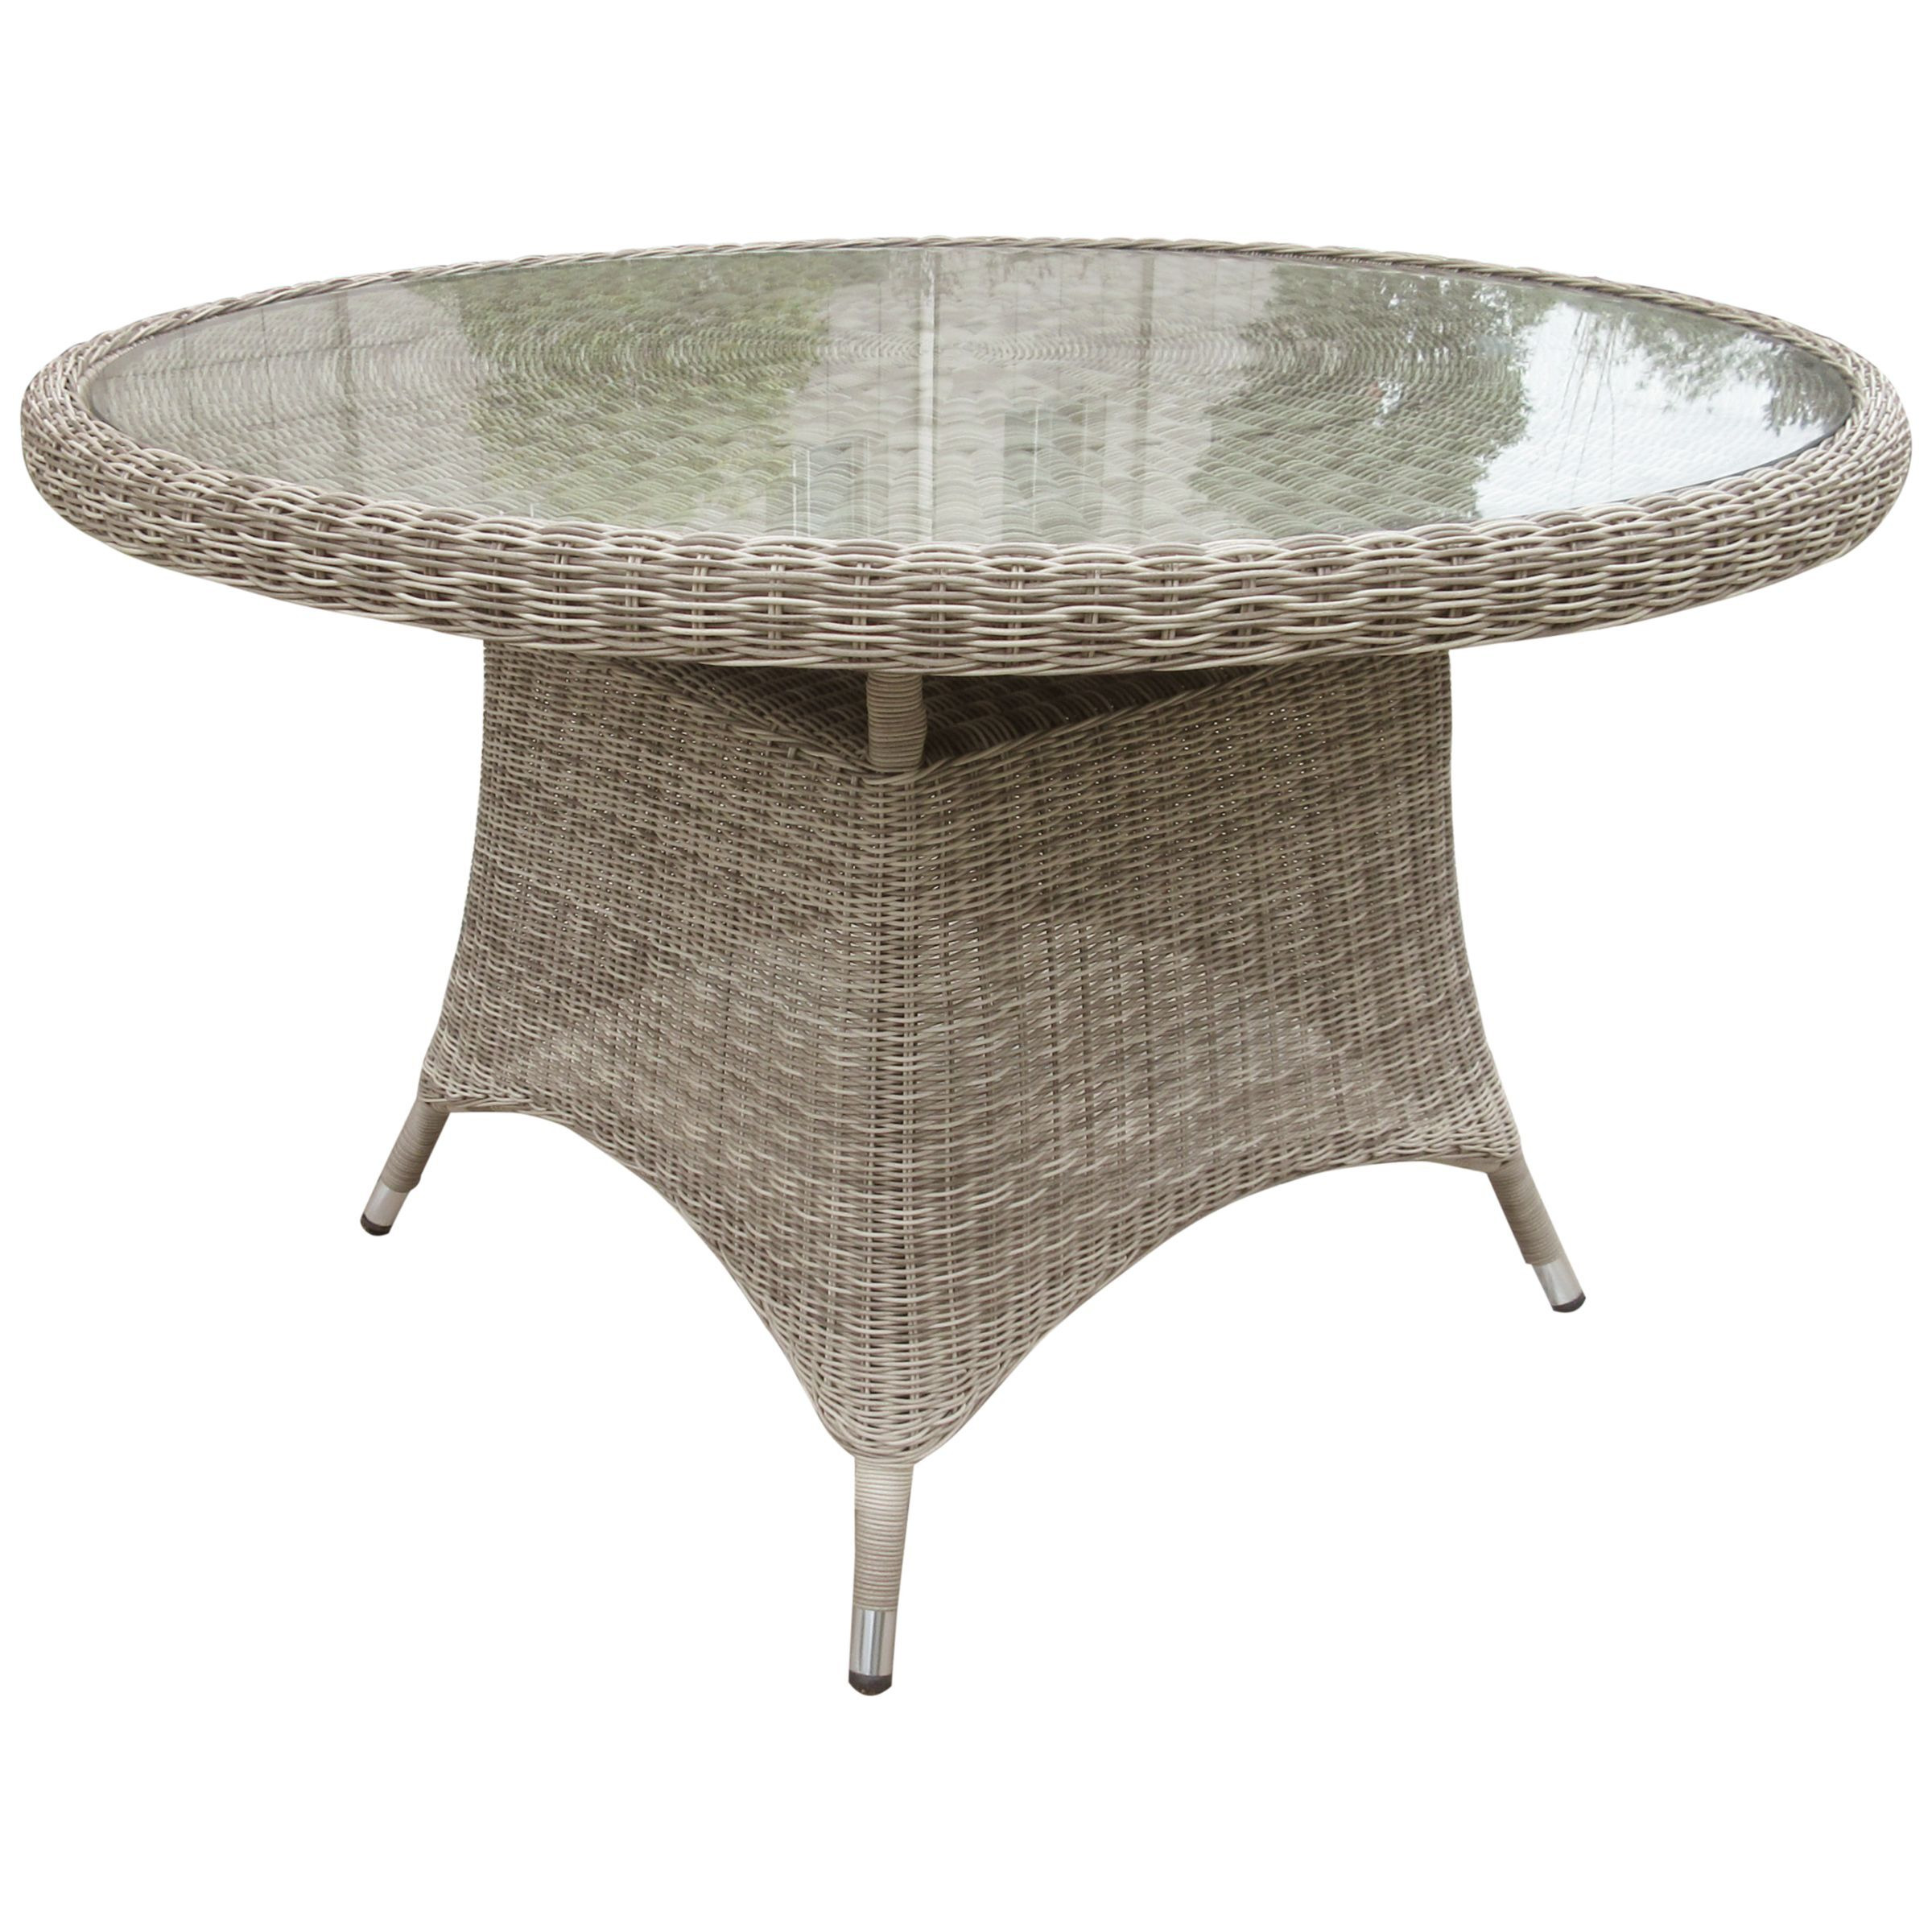 John Lewis Dante 4-Seater Round Glass Top Garden Dining Table - image 1